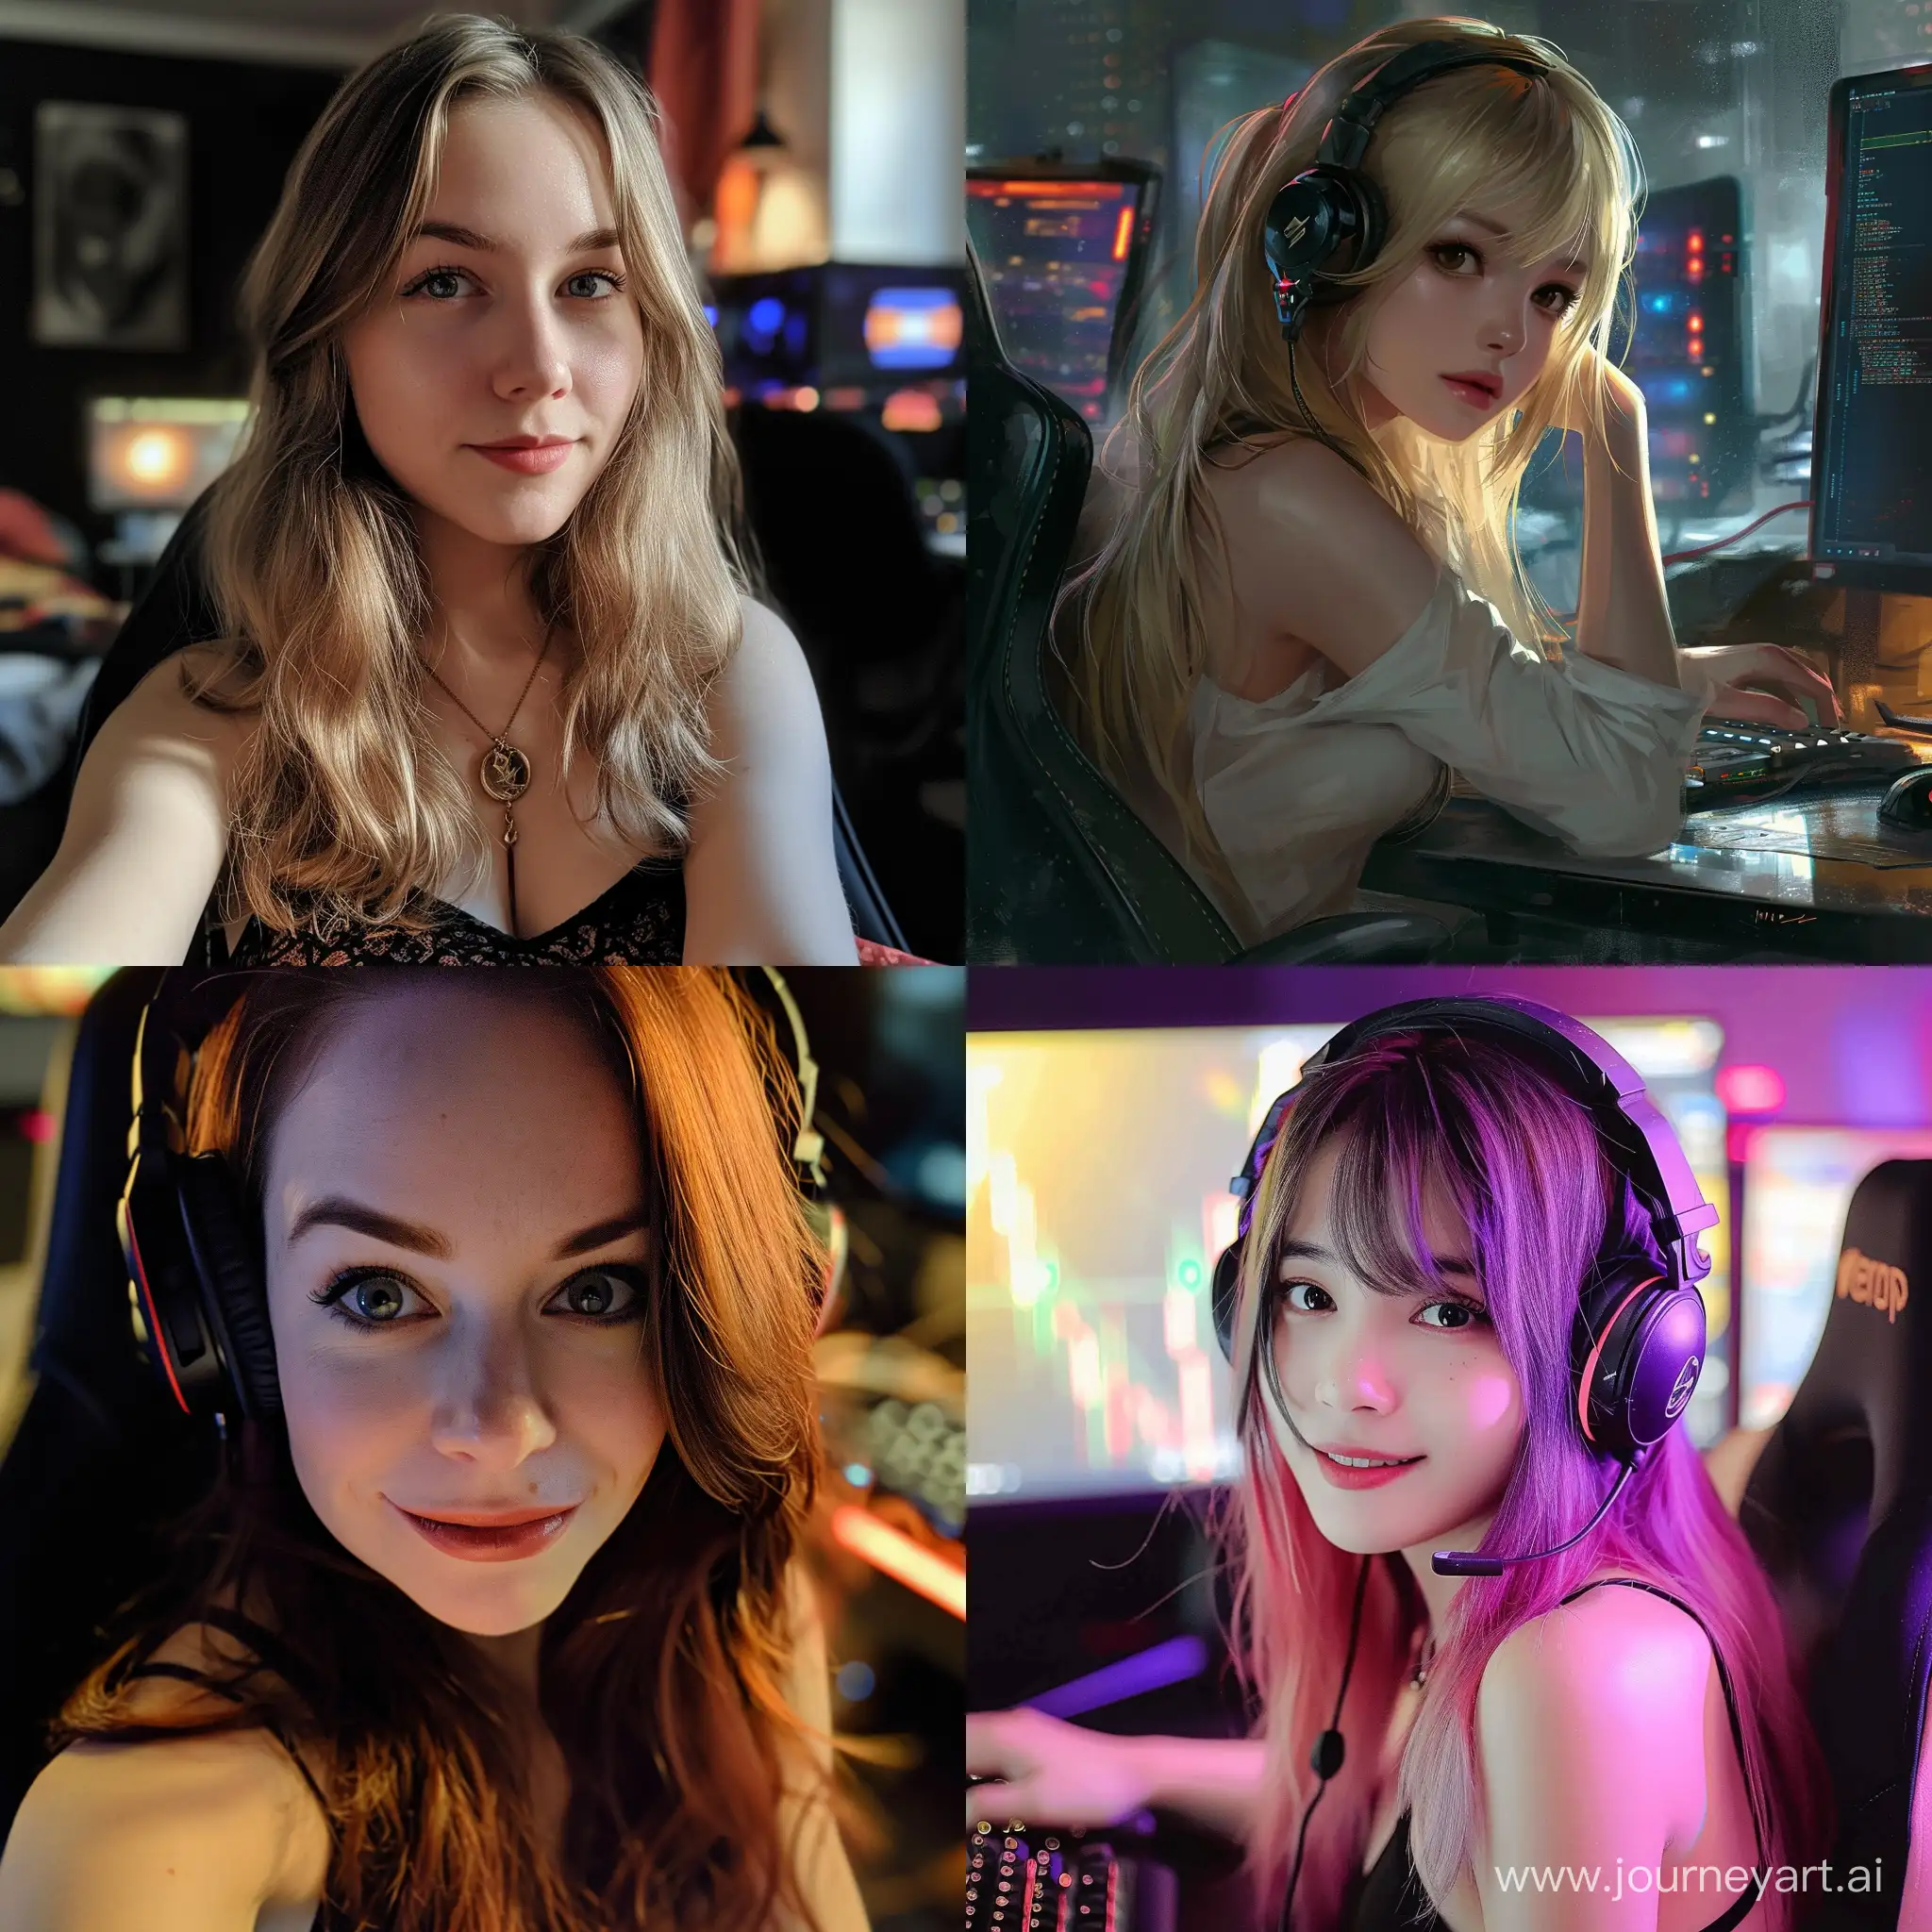 Stylish-Crypto-Gamer-Women-in-Virtual-Reality